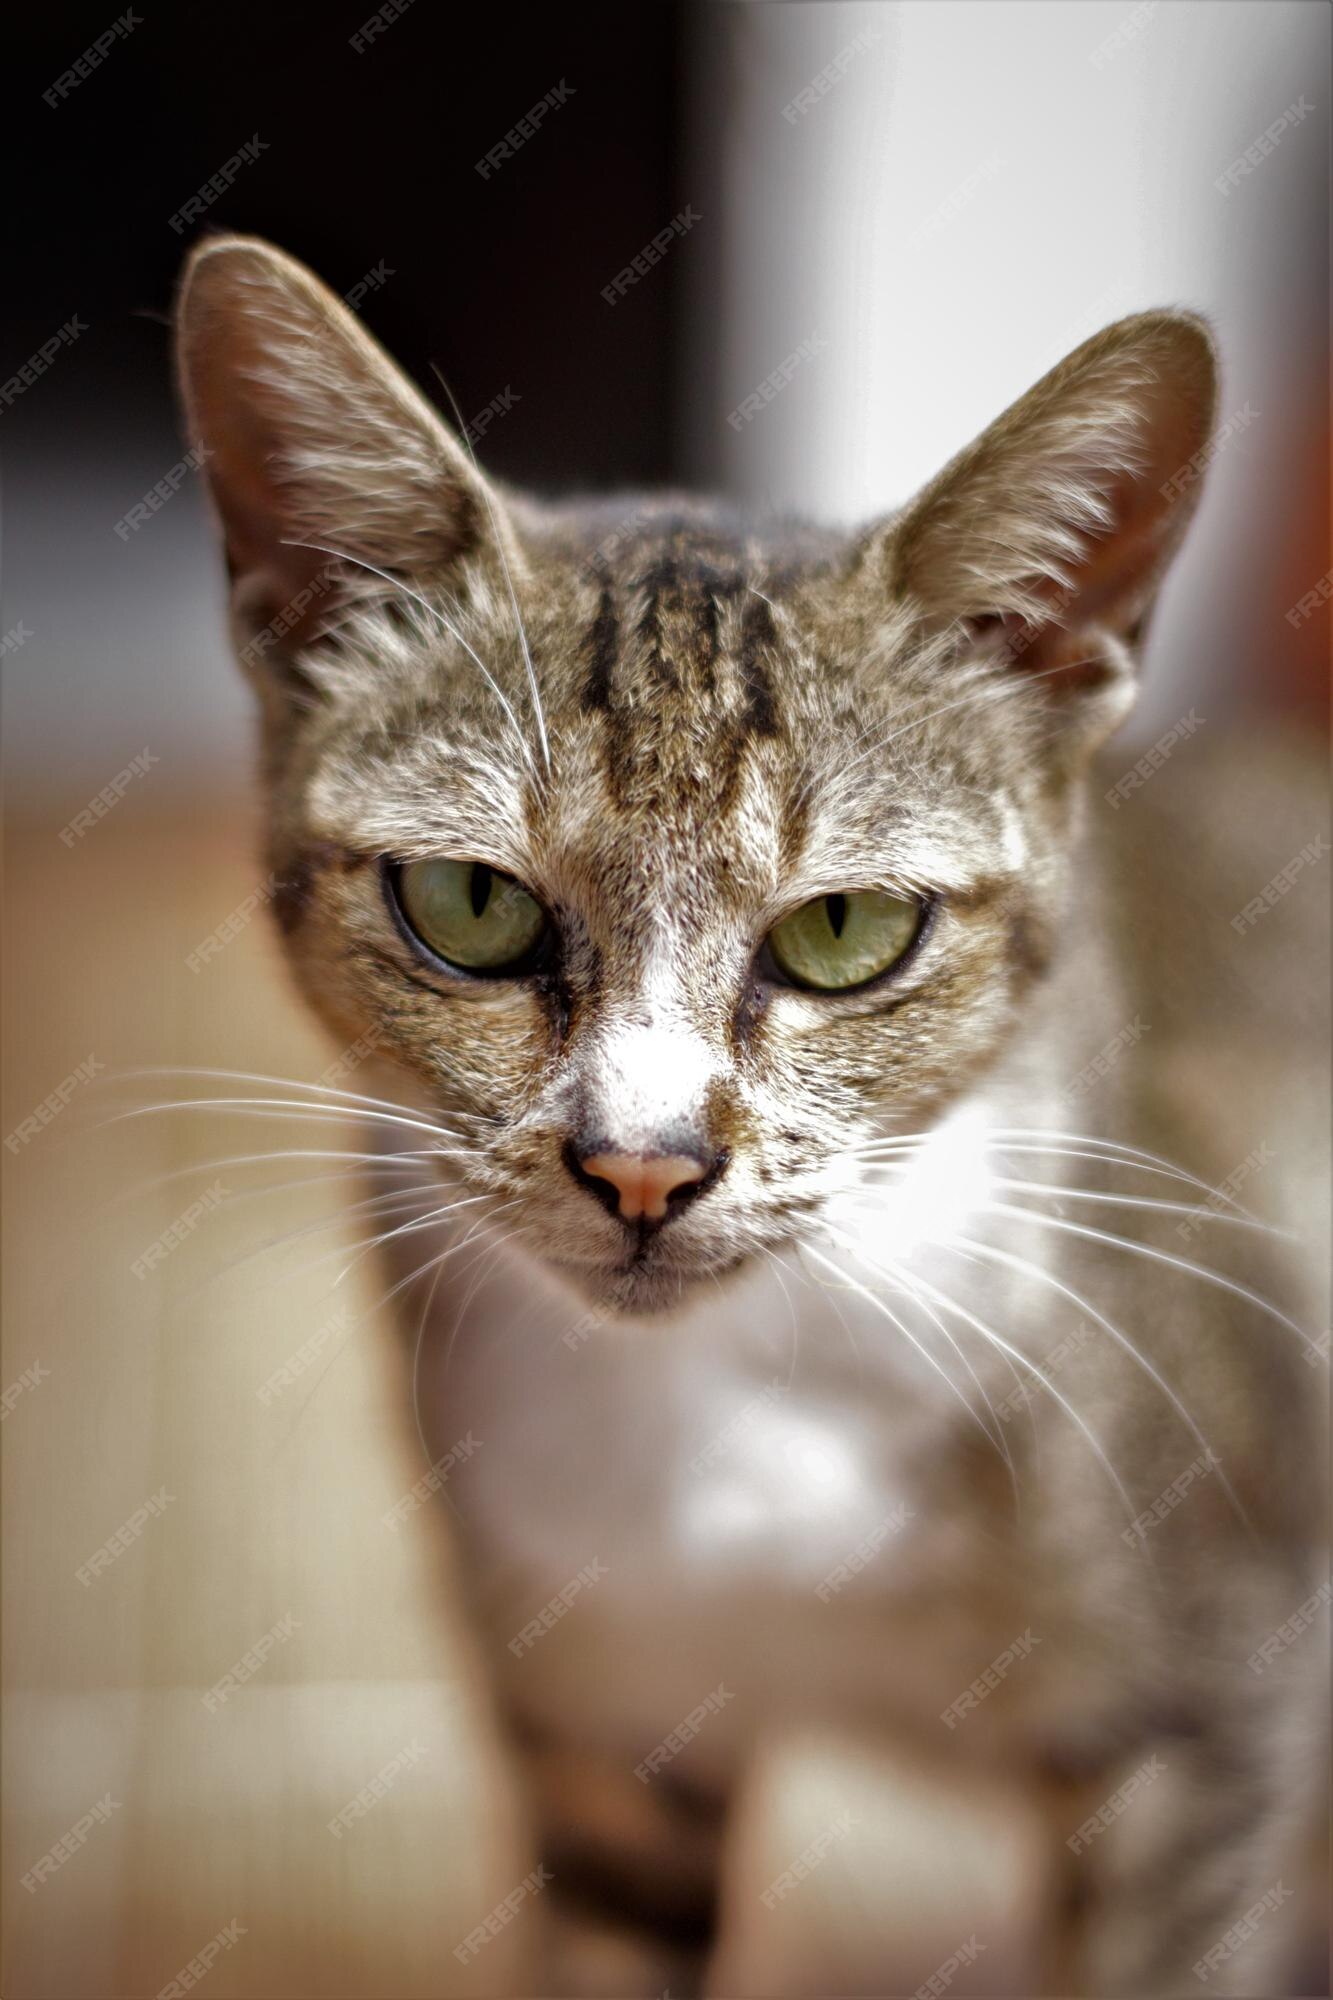 Premium Photo  Angry cat face portrait close up